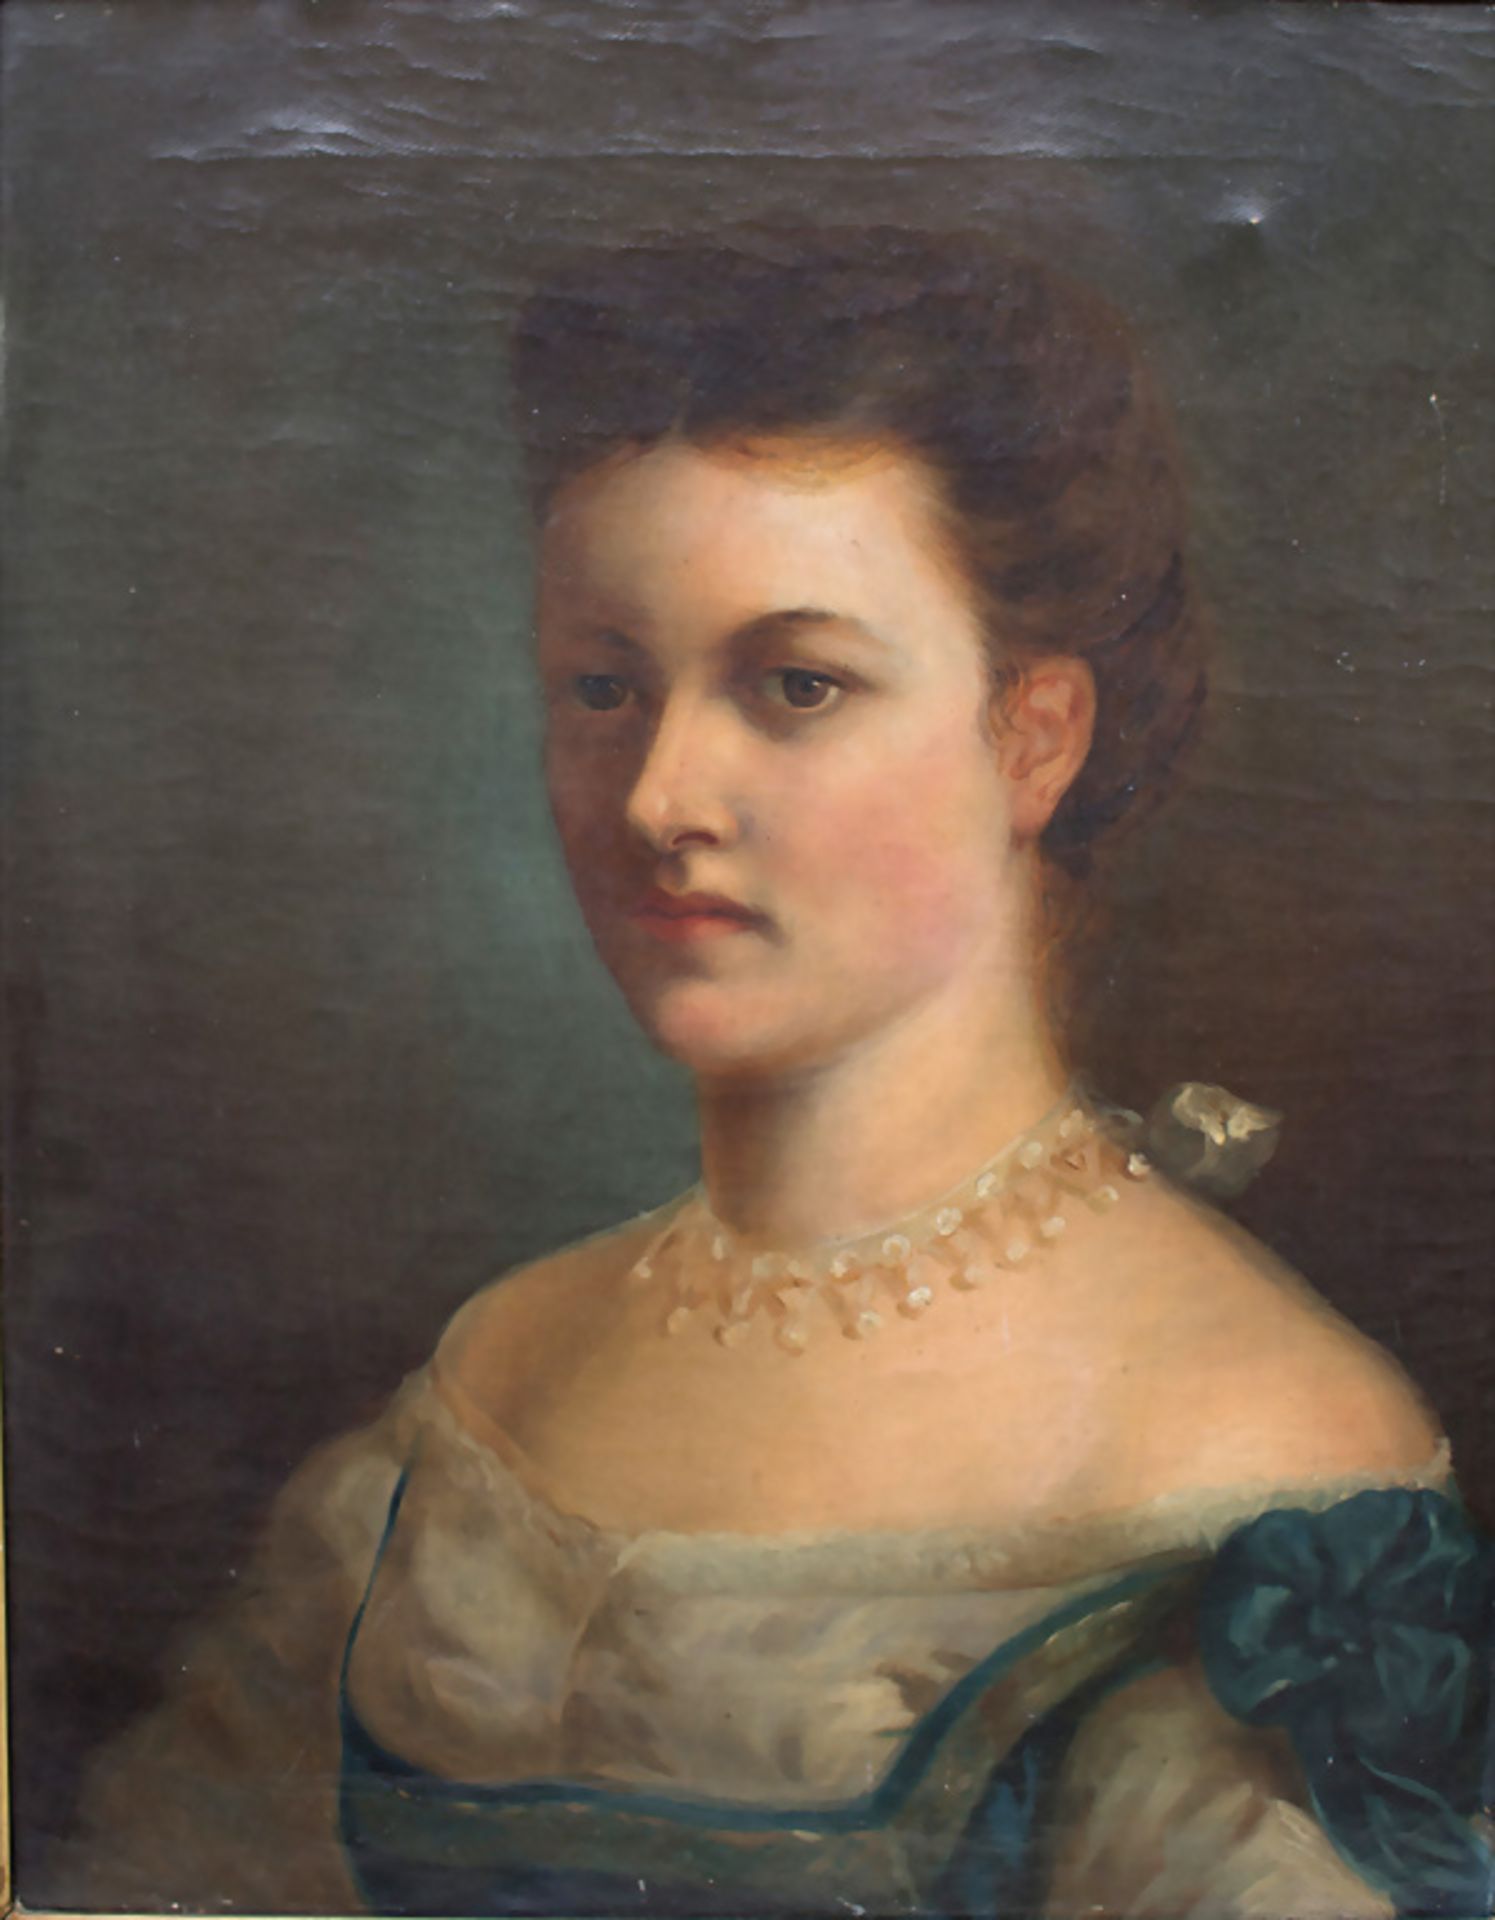 Künstler des 19. Jh., 'Porträt einer jungen Dame' / 'A portrait of a young lady'